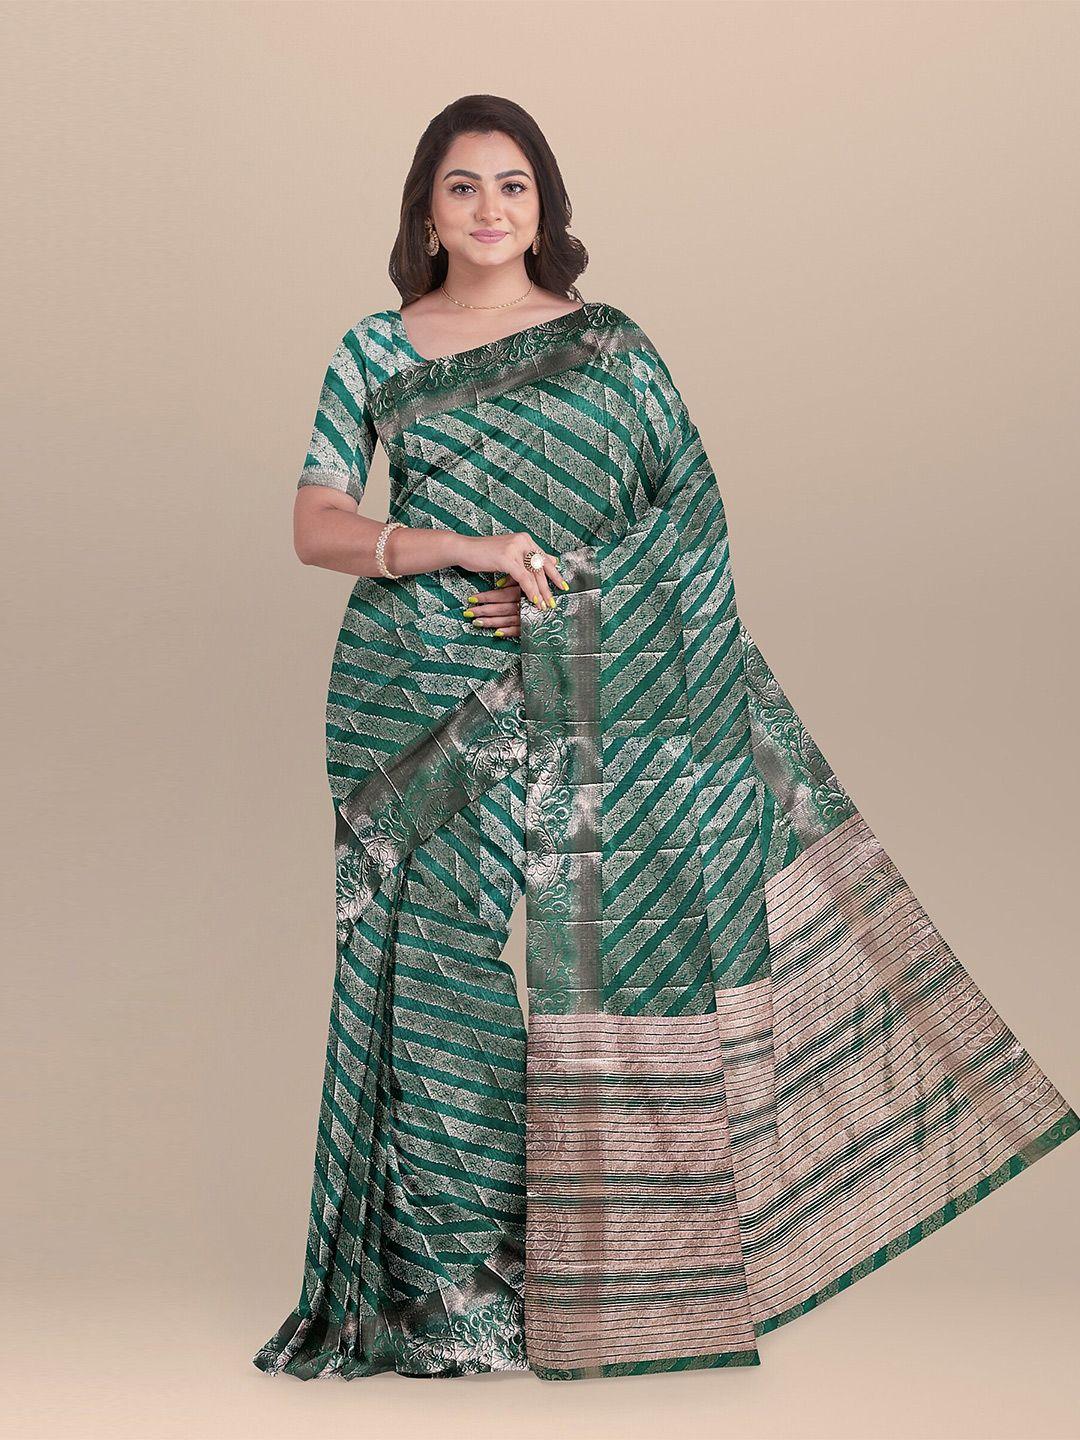 the-chennai-silks-green-&-gold-toned-striped-zari-jute-cotton-fusion-saree